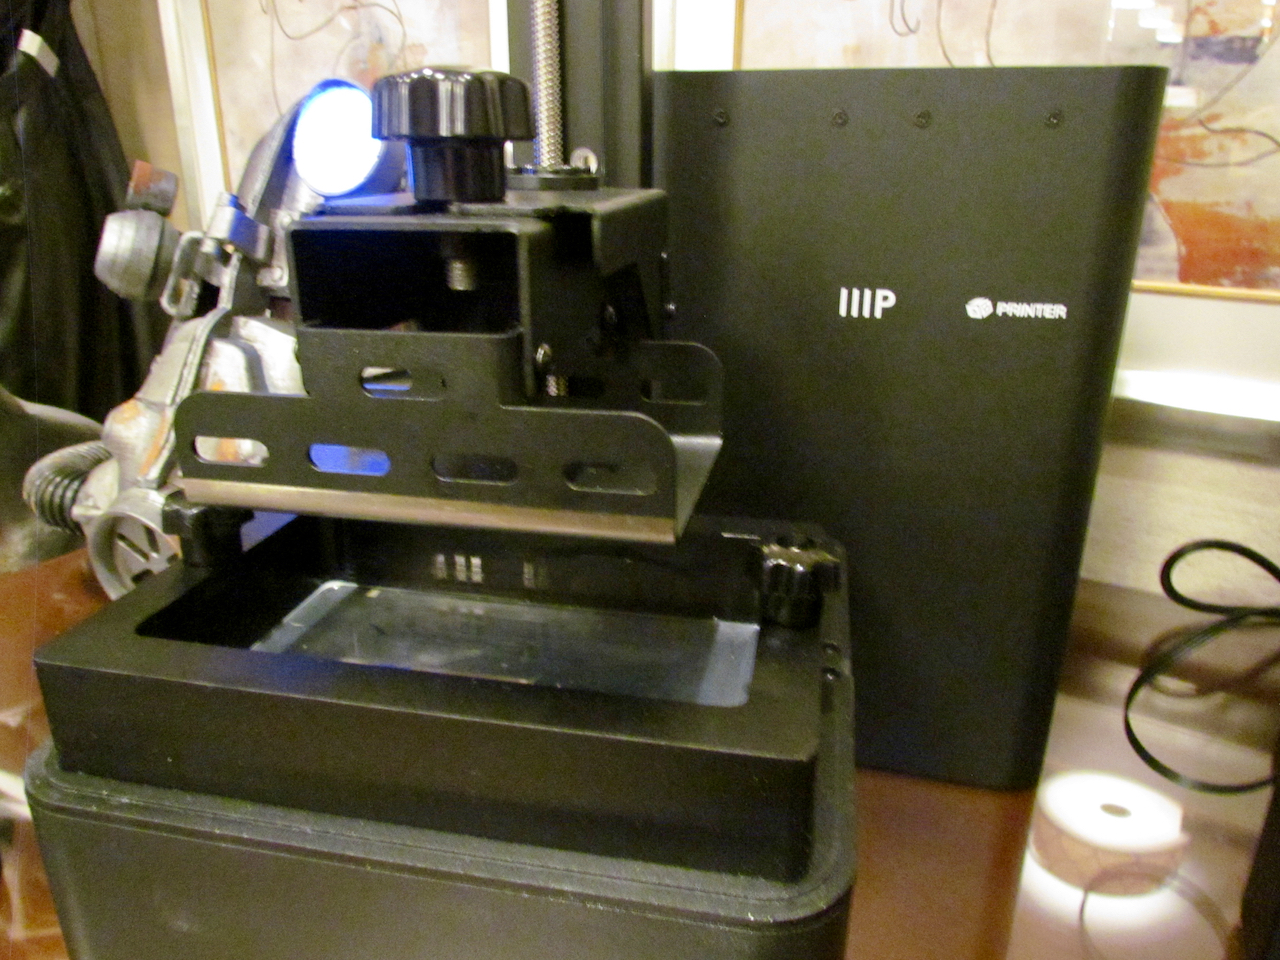  The new Monoprice inexpensive resin-based desktop 3D printer 